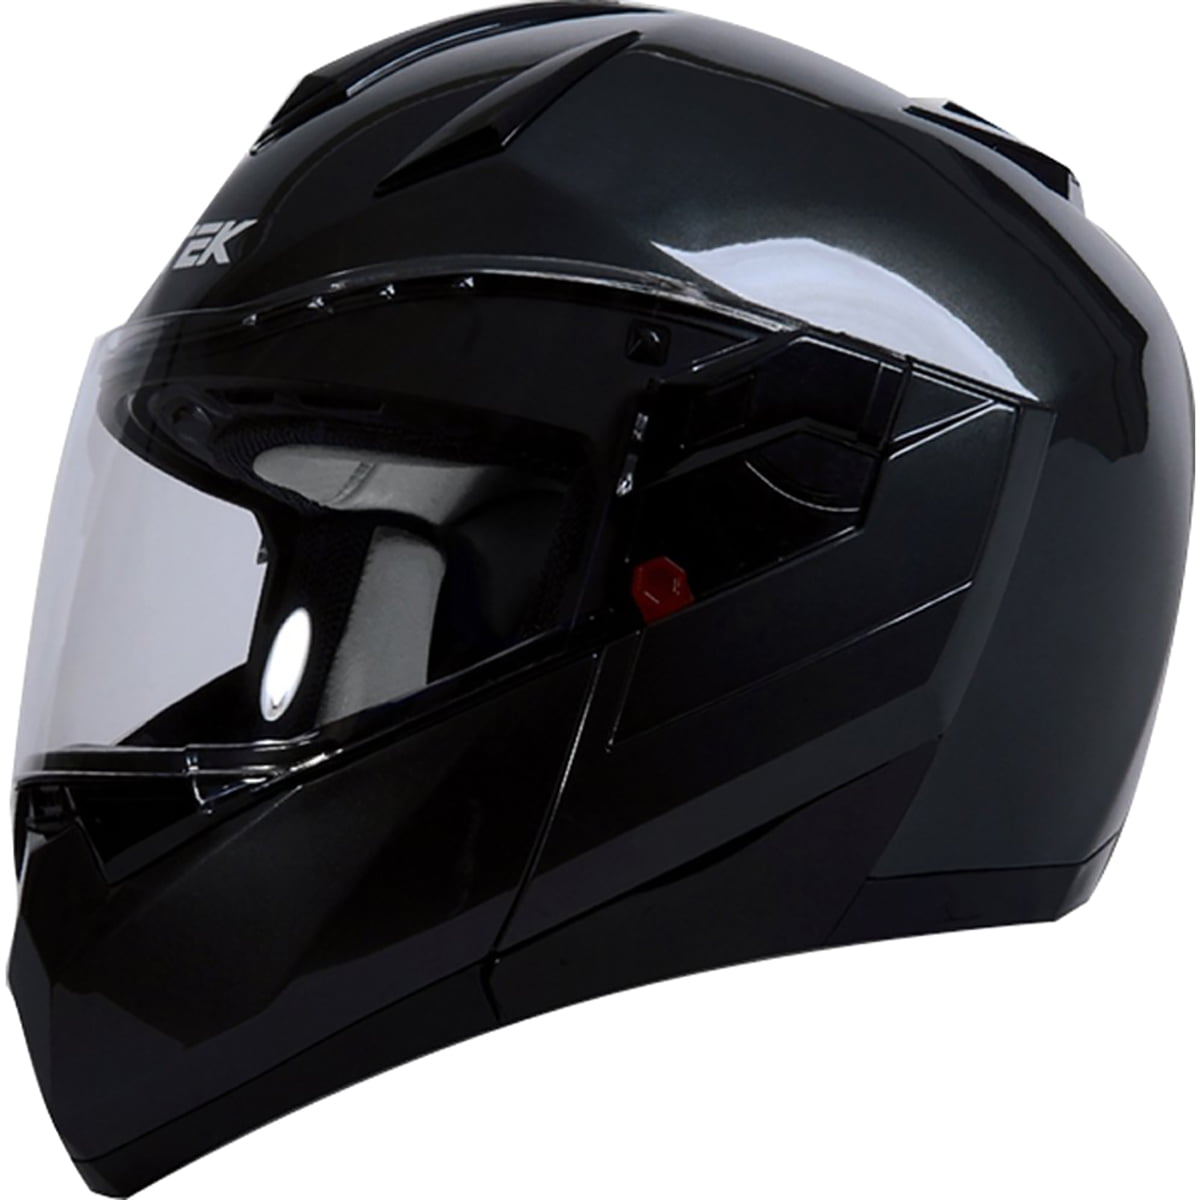 Nitek Carbon Fiber Diamond Men's Street Motorcycle Helmet - Walmart.com ...